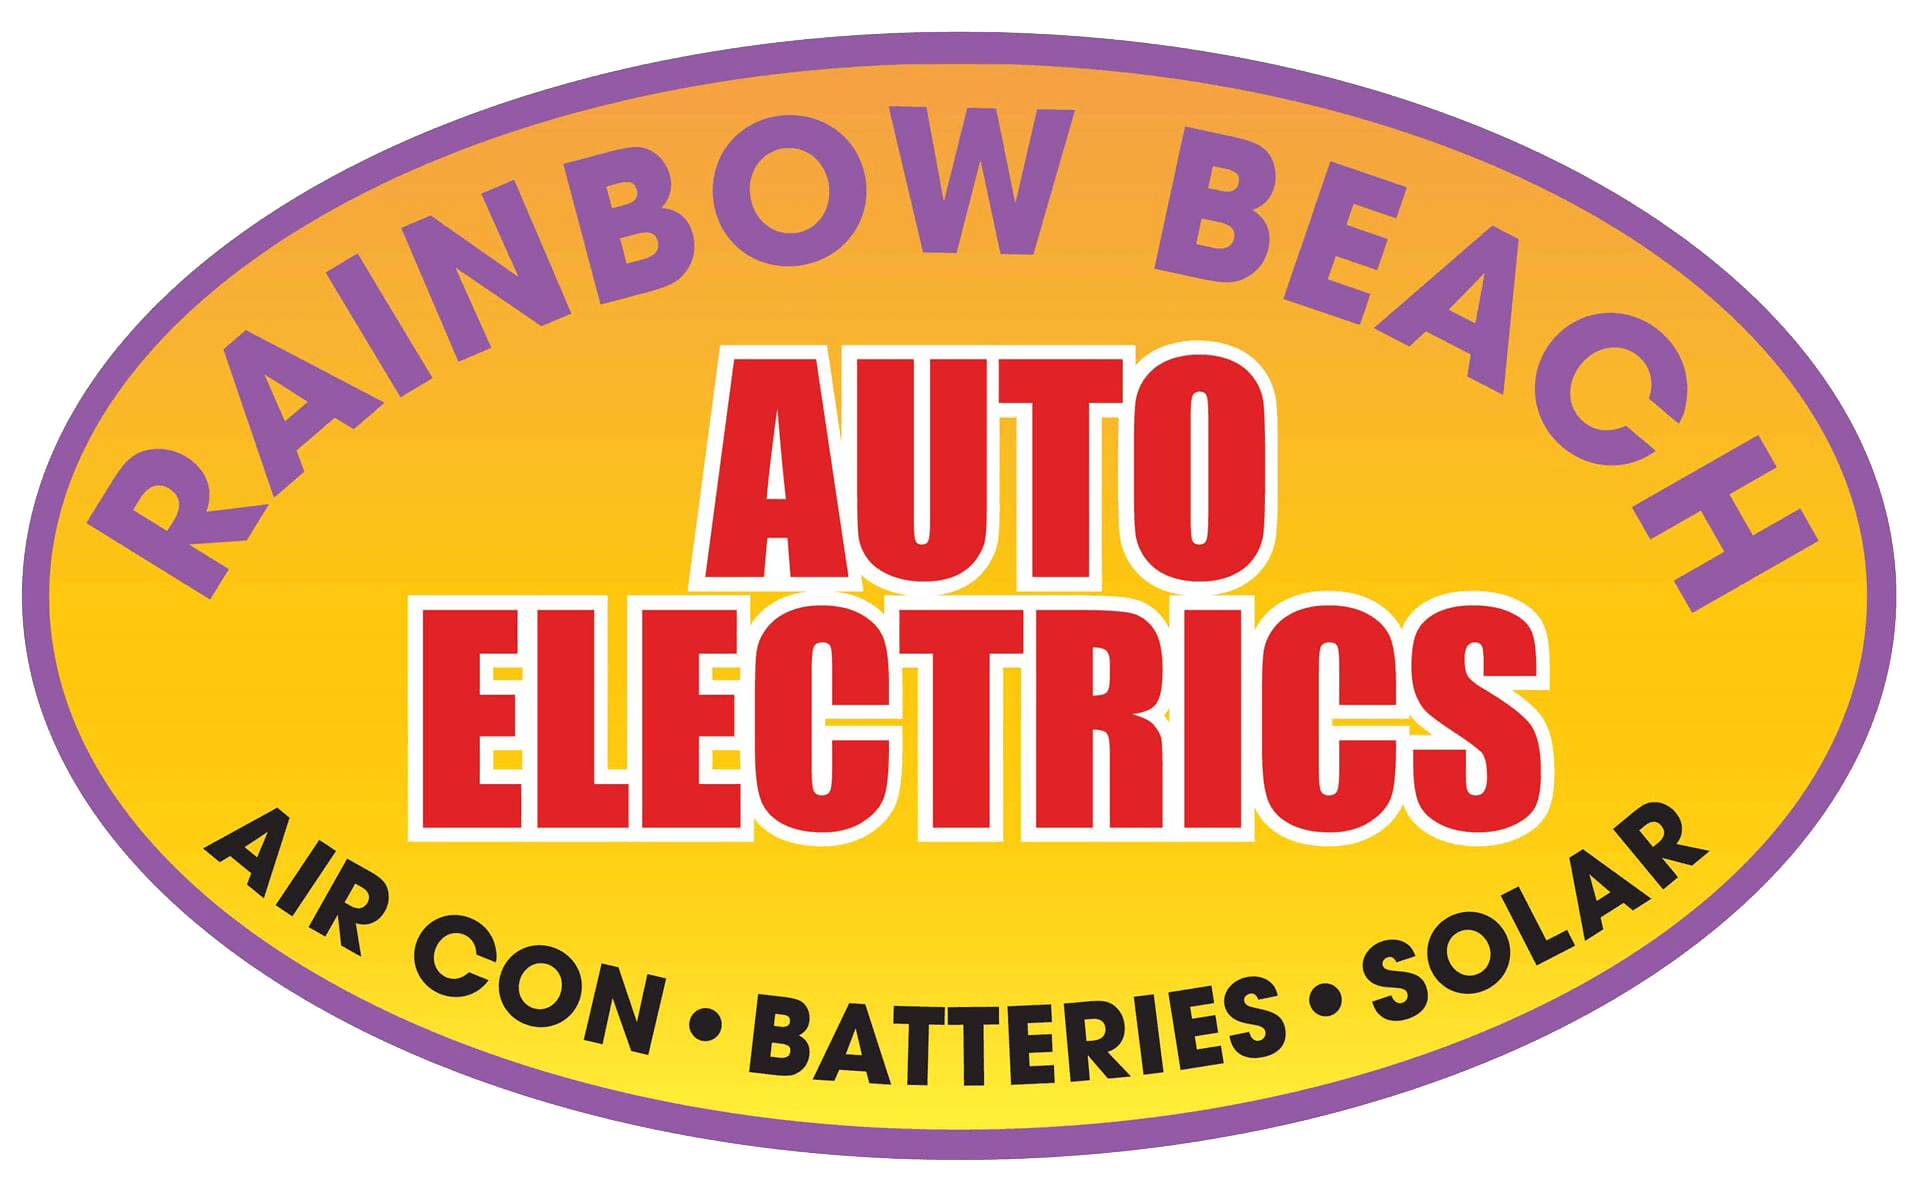 Rainbow Beach Auto Electrics